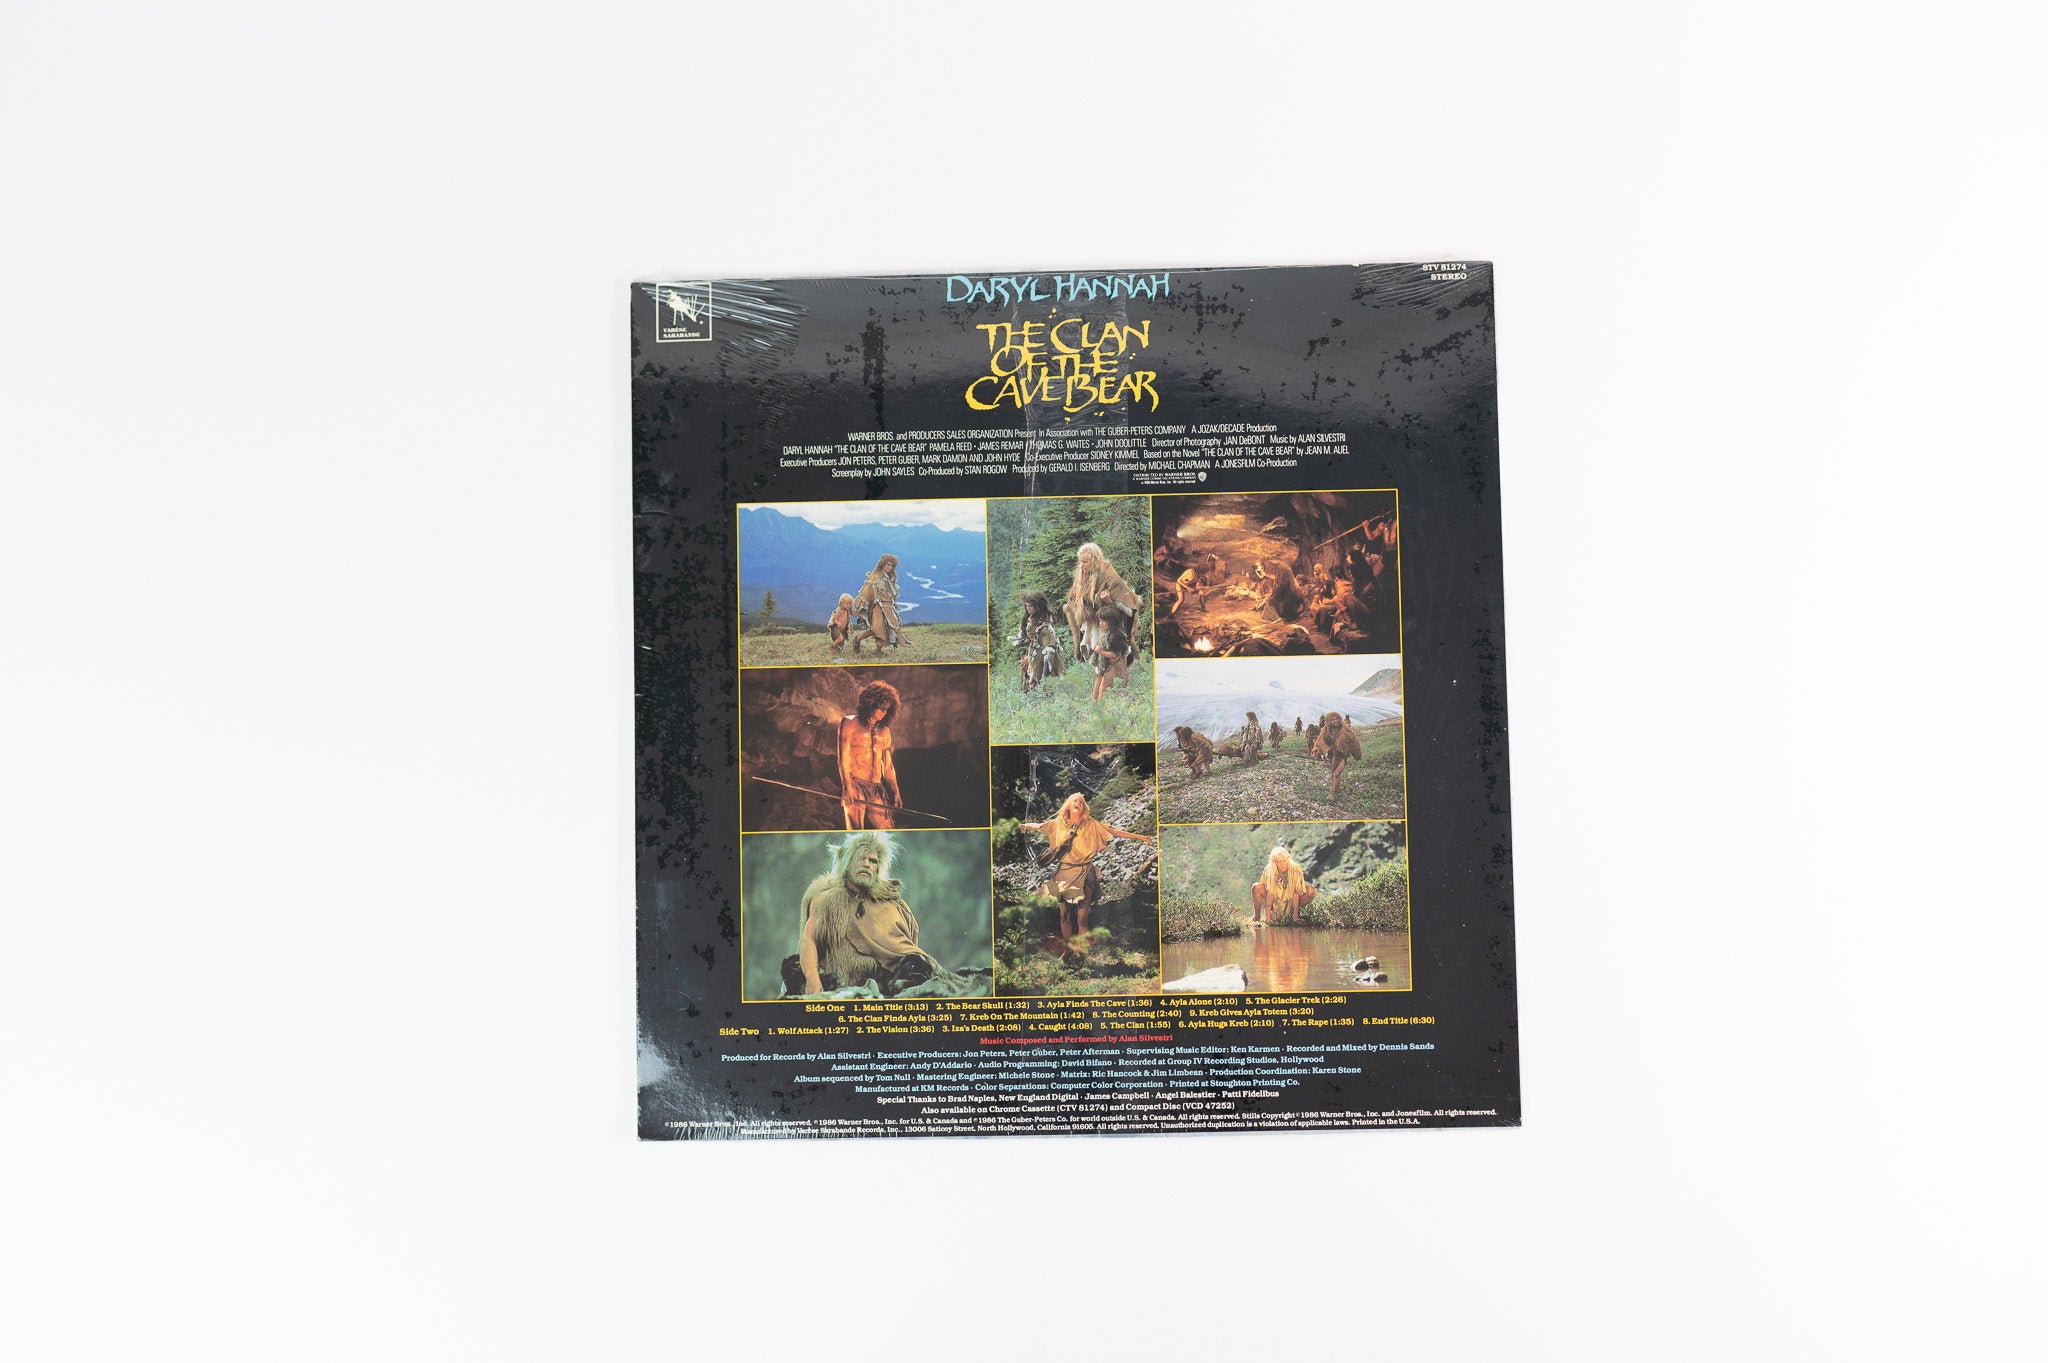 Alan Silvestri - The Clan Of The Cave Bear (Original Soundtrack) on Varese Sarabande Sealed